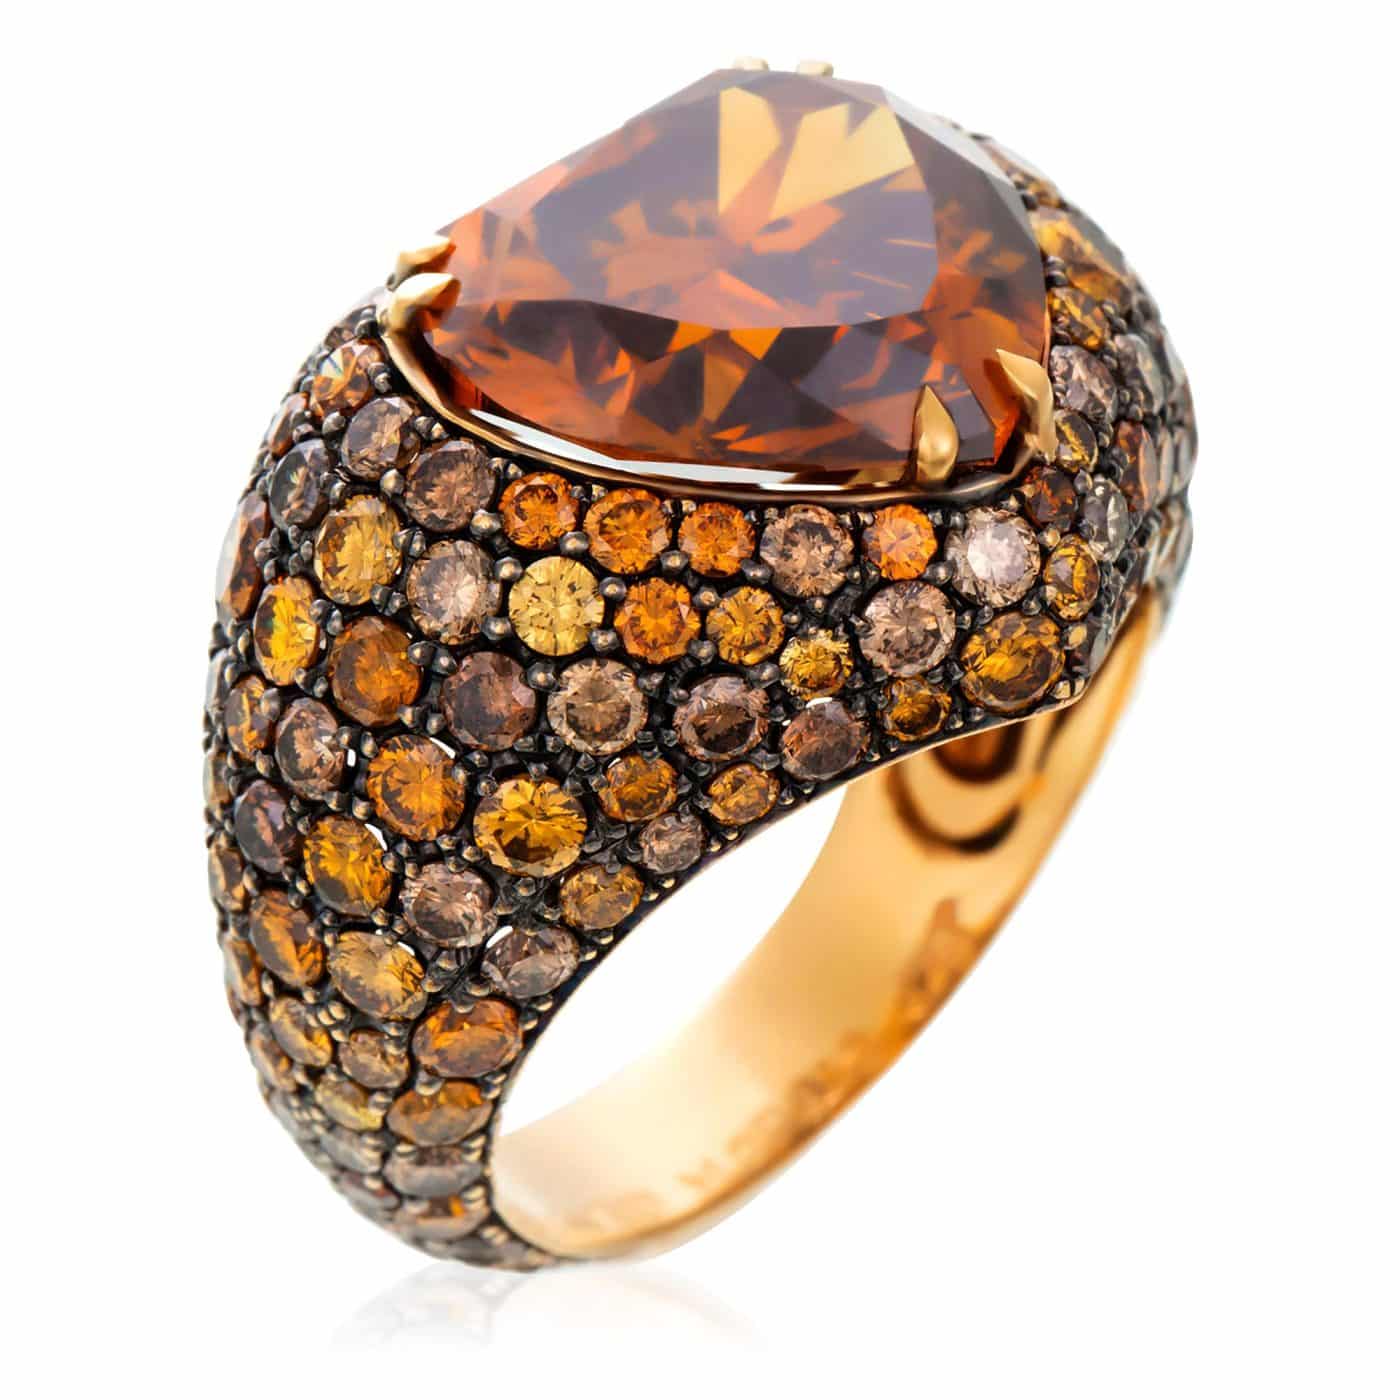 GIA-certified 7.08-carat fancy orange-brown heart-shaped diamond cocktail ring